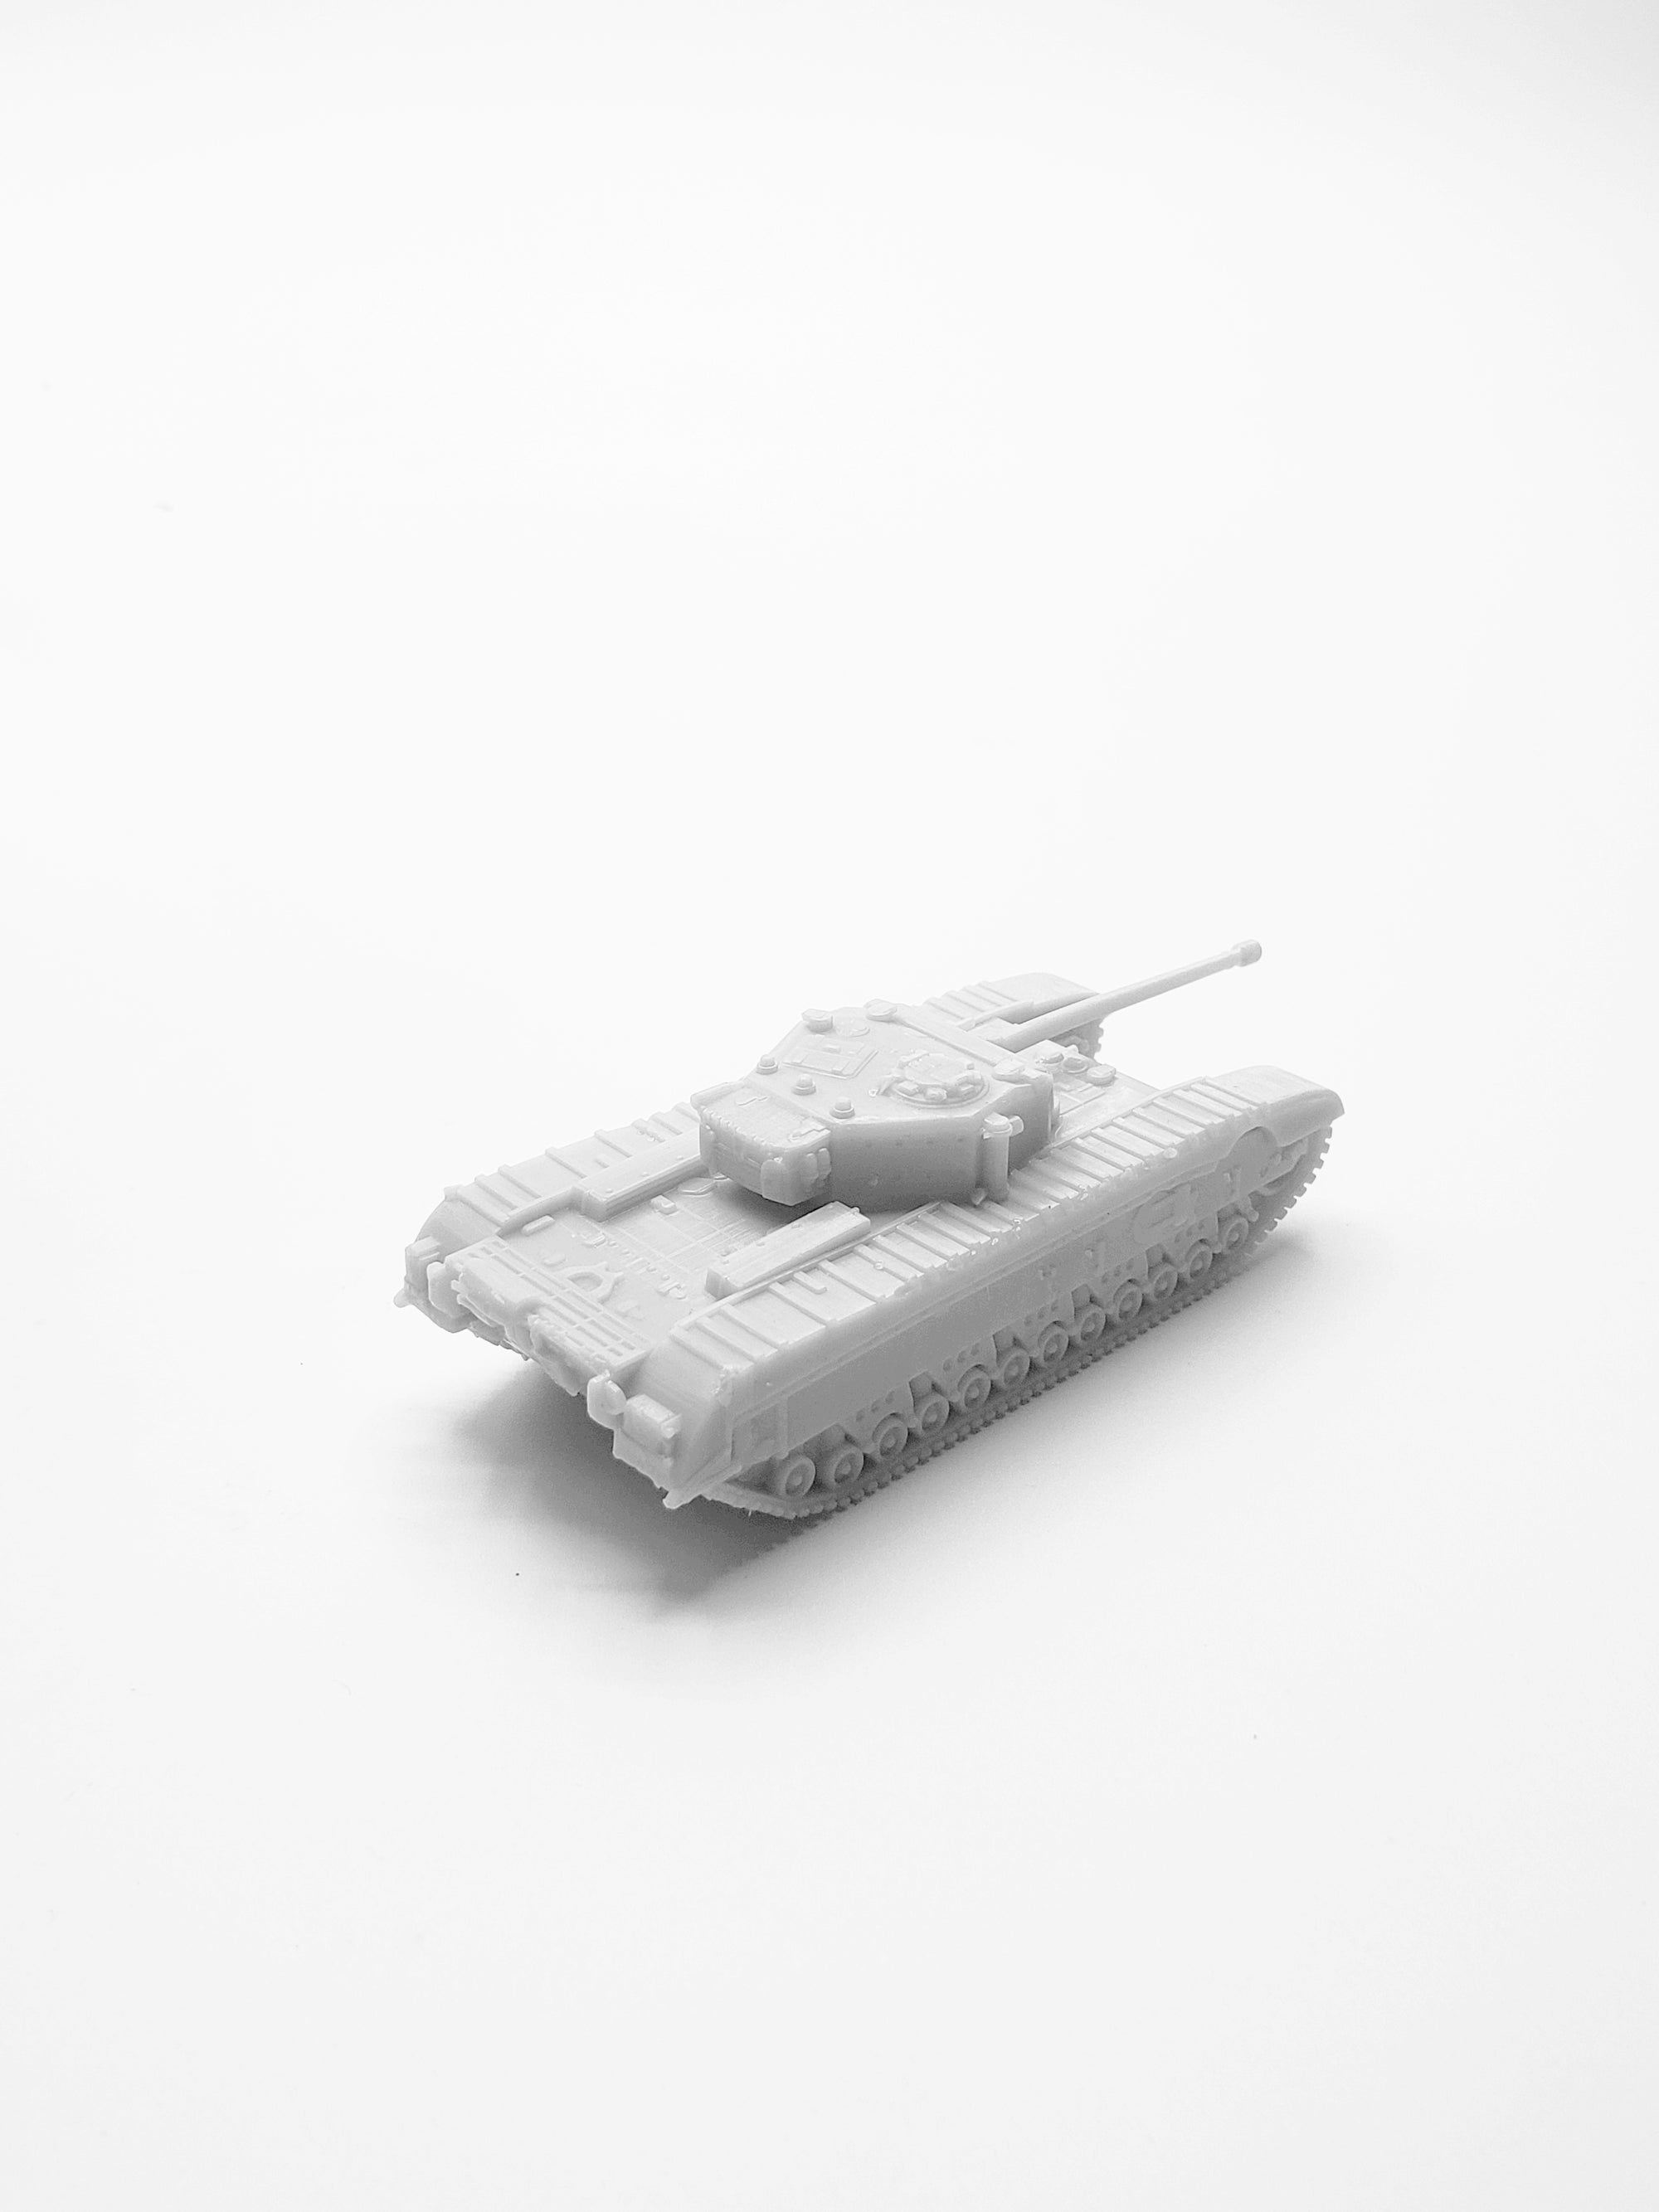 Black Prince Infantry Tank (A43)